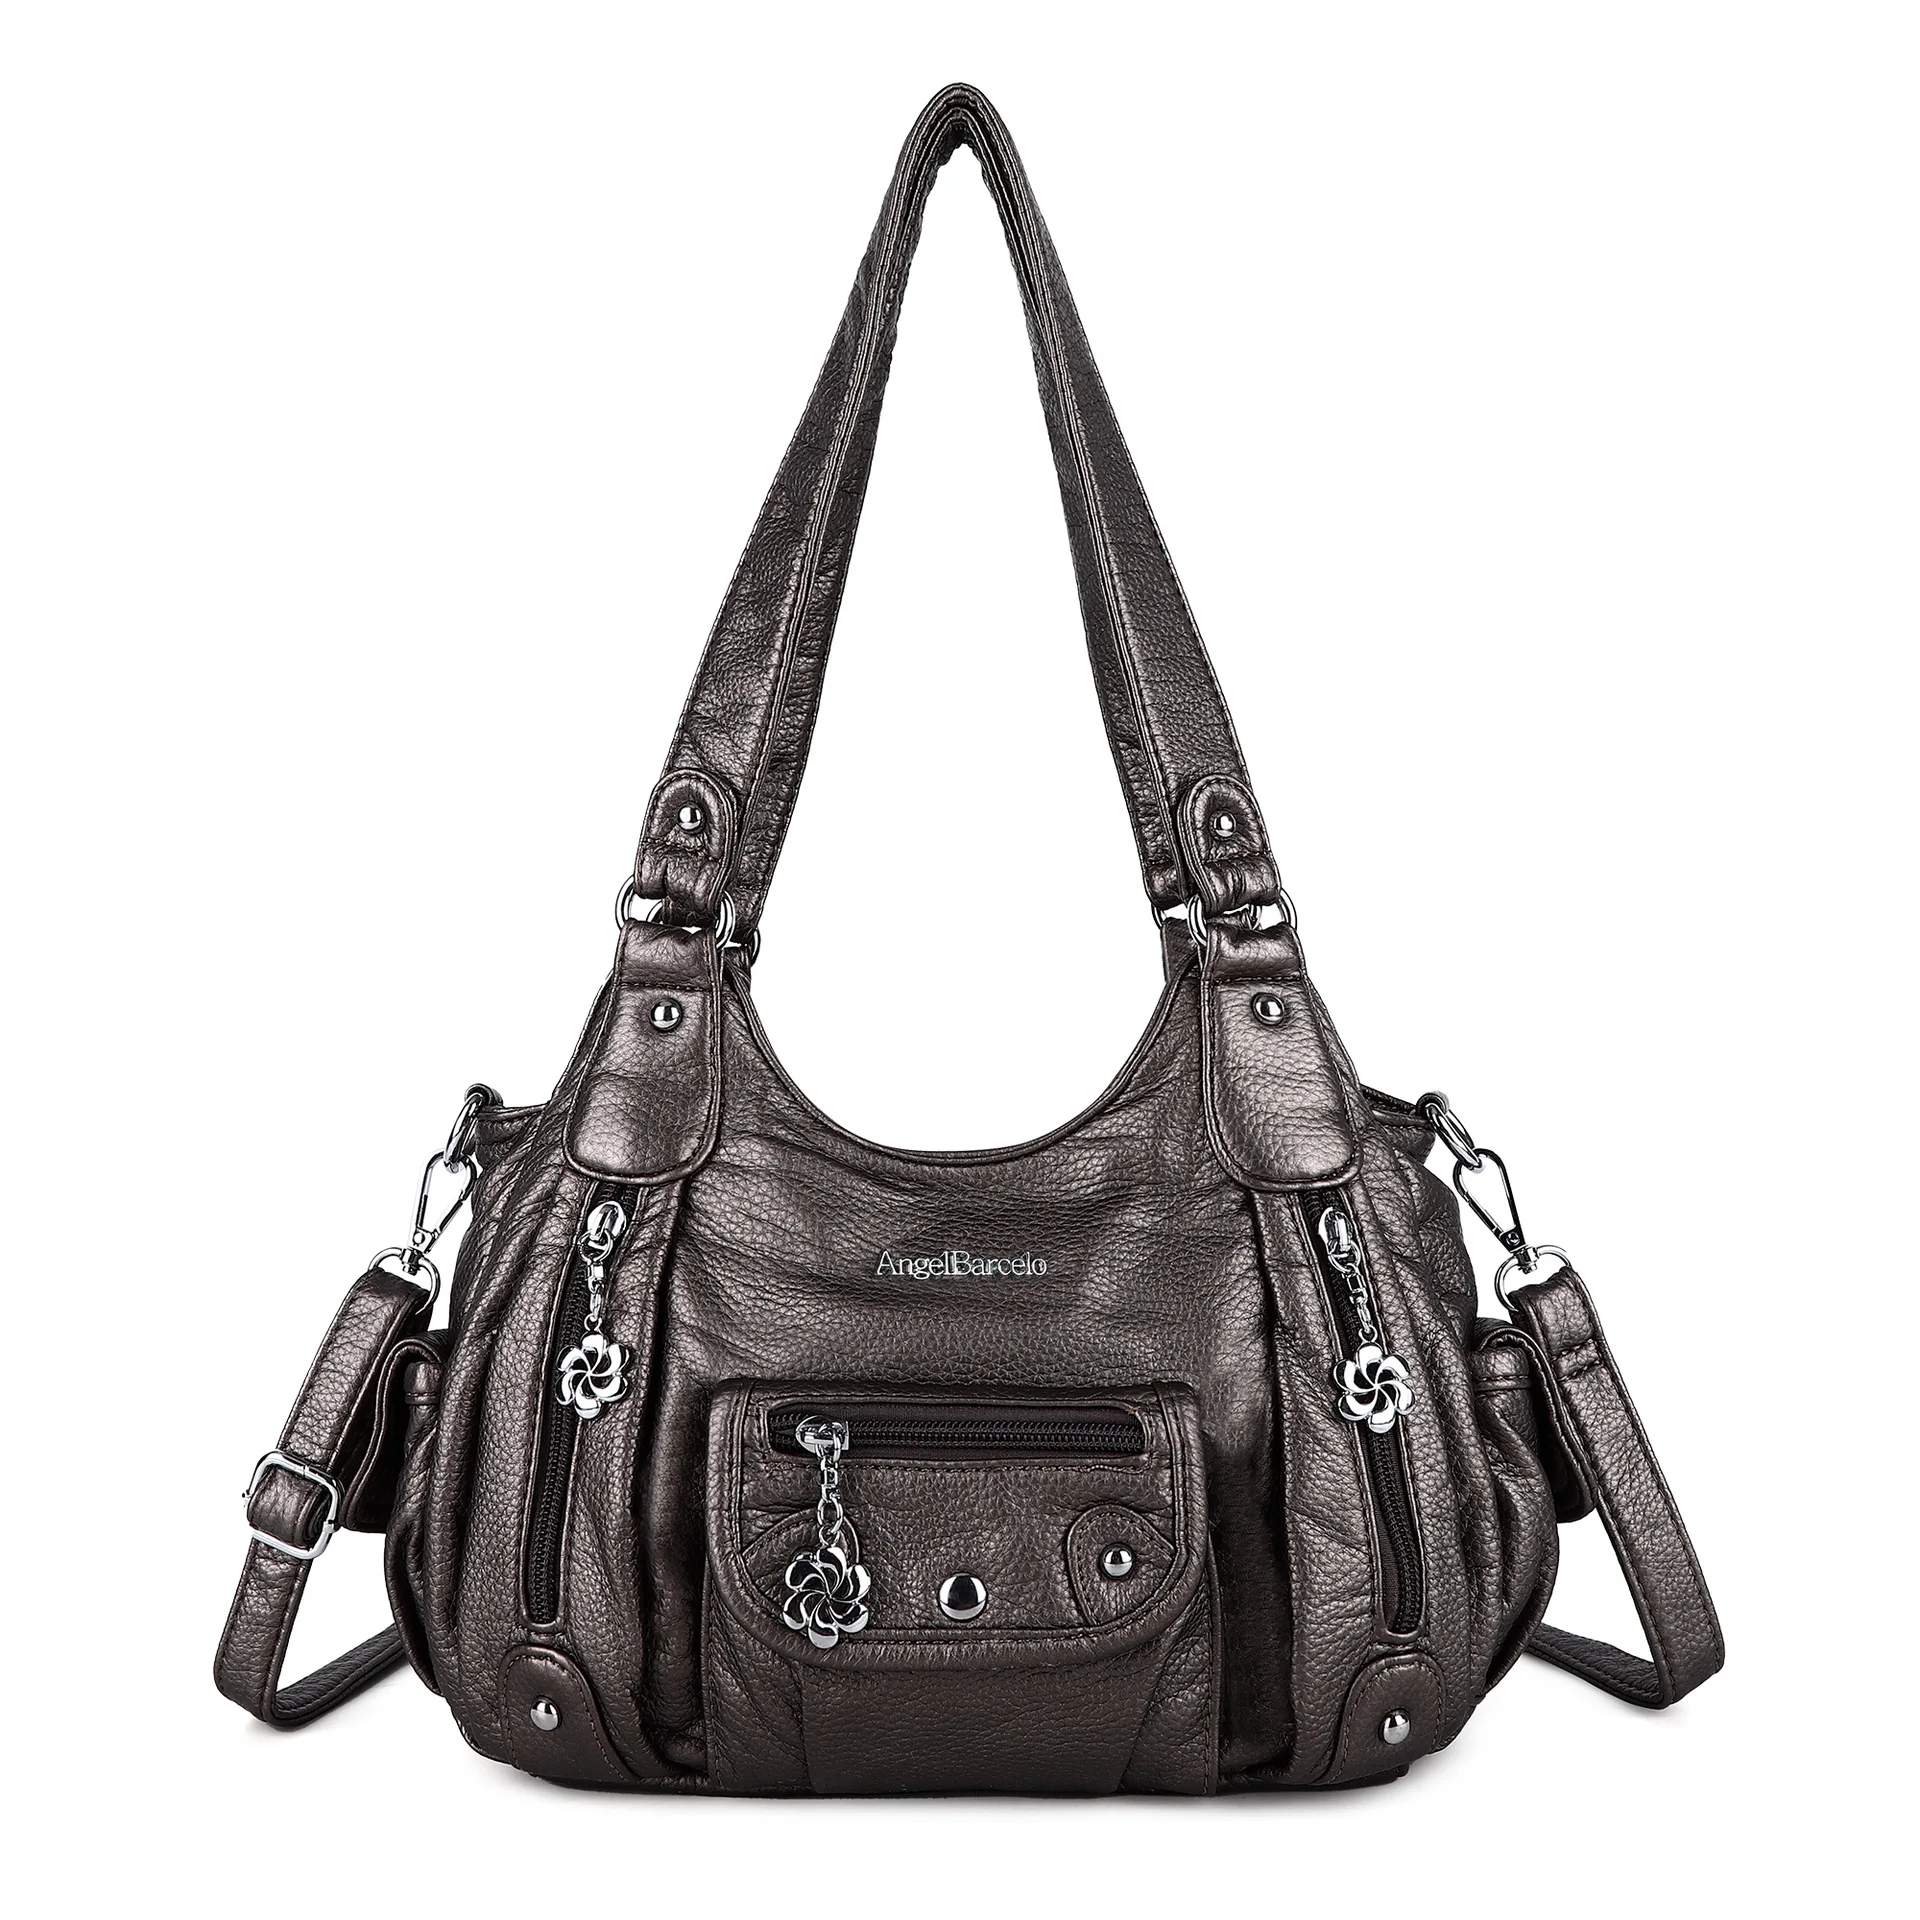 

Angel Barcelo Newest Fashion Bag Women Bags PU Leather Hobo Bag Top-handle Handbag Female Satchel Ladies Shoulder Bags